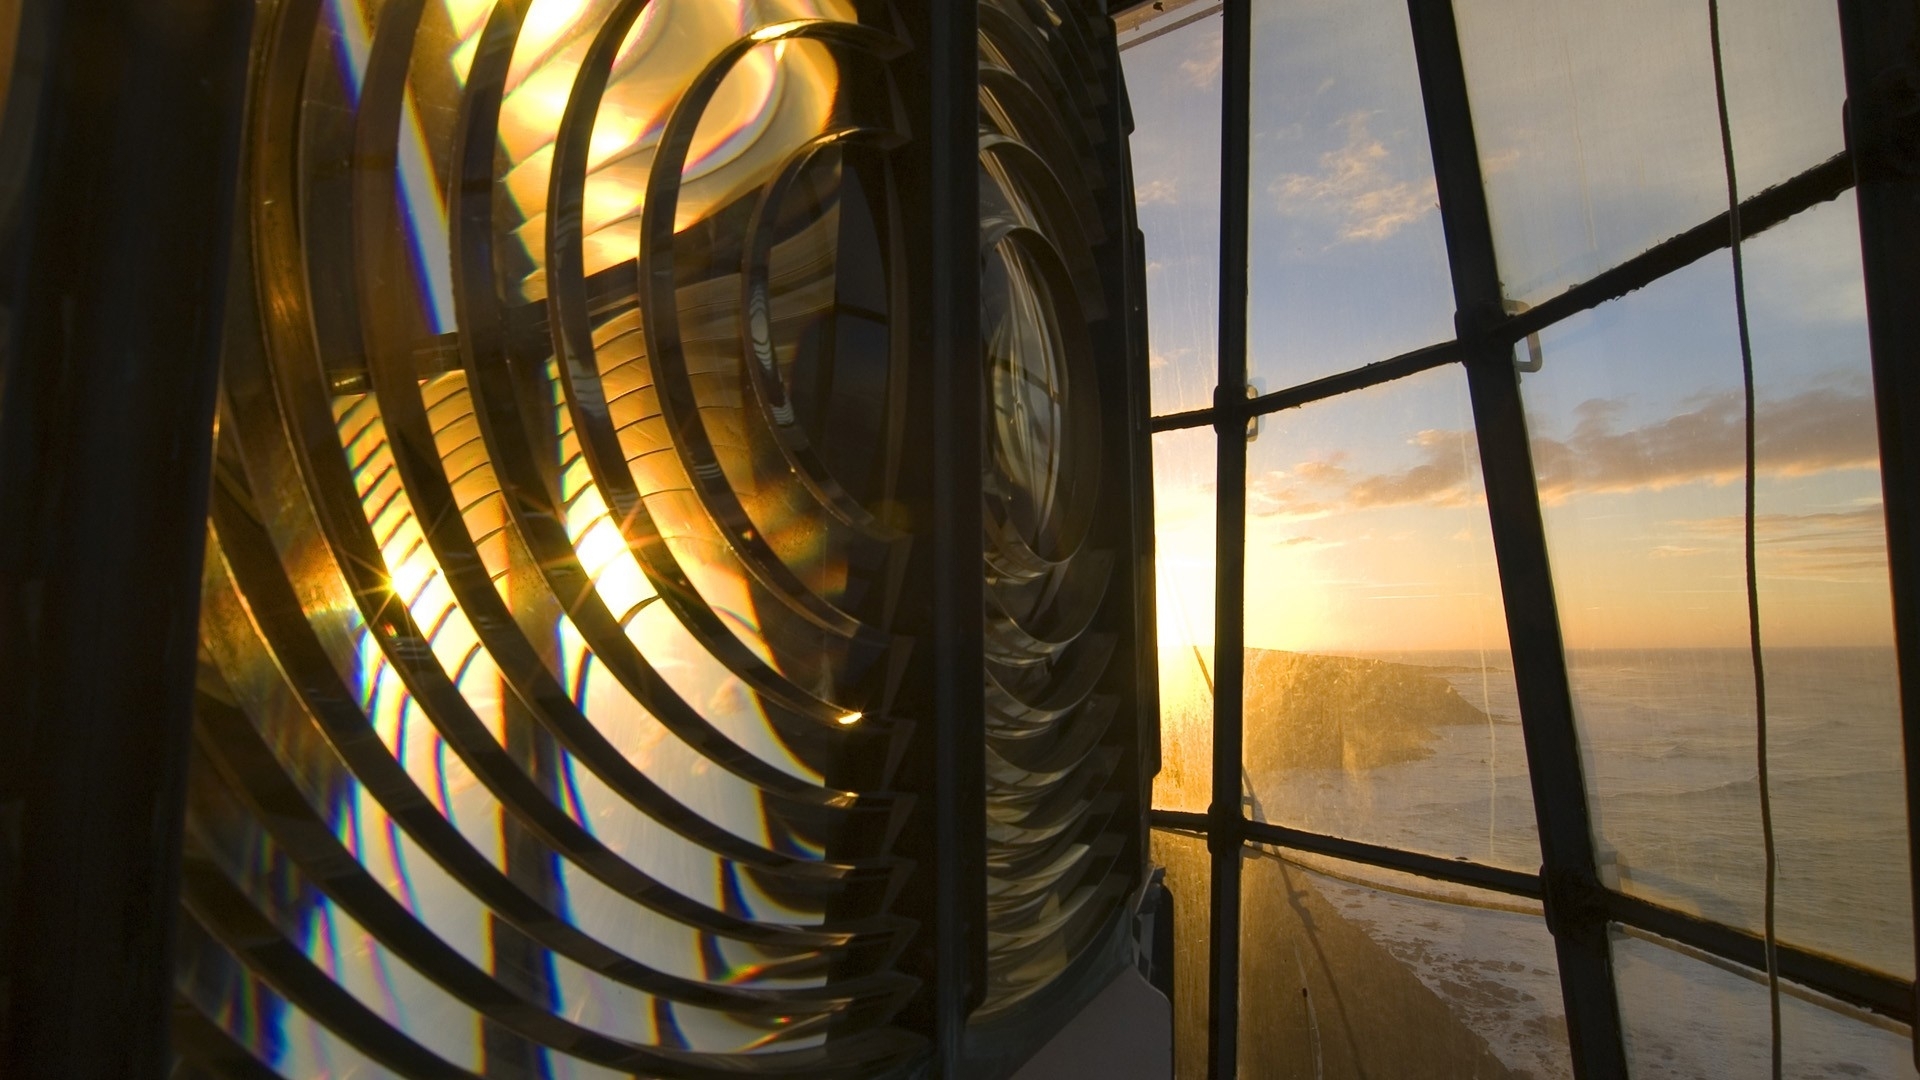 lighthouse, Lens, Australia, World, Architecture, Lense, Mirrir, Window, Glass, Light, Lamp, Ocean, Sea, Sky, Clouds, Sunset, Sunrise, Scenic, View Wallpaper